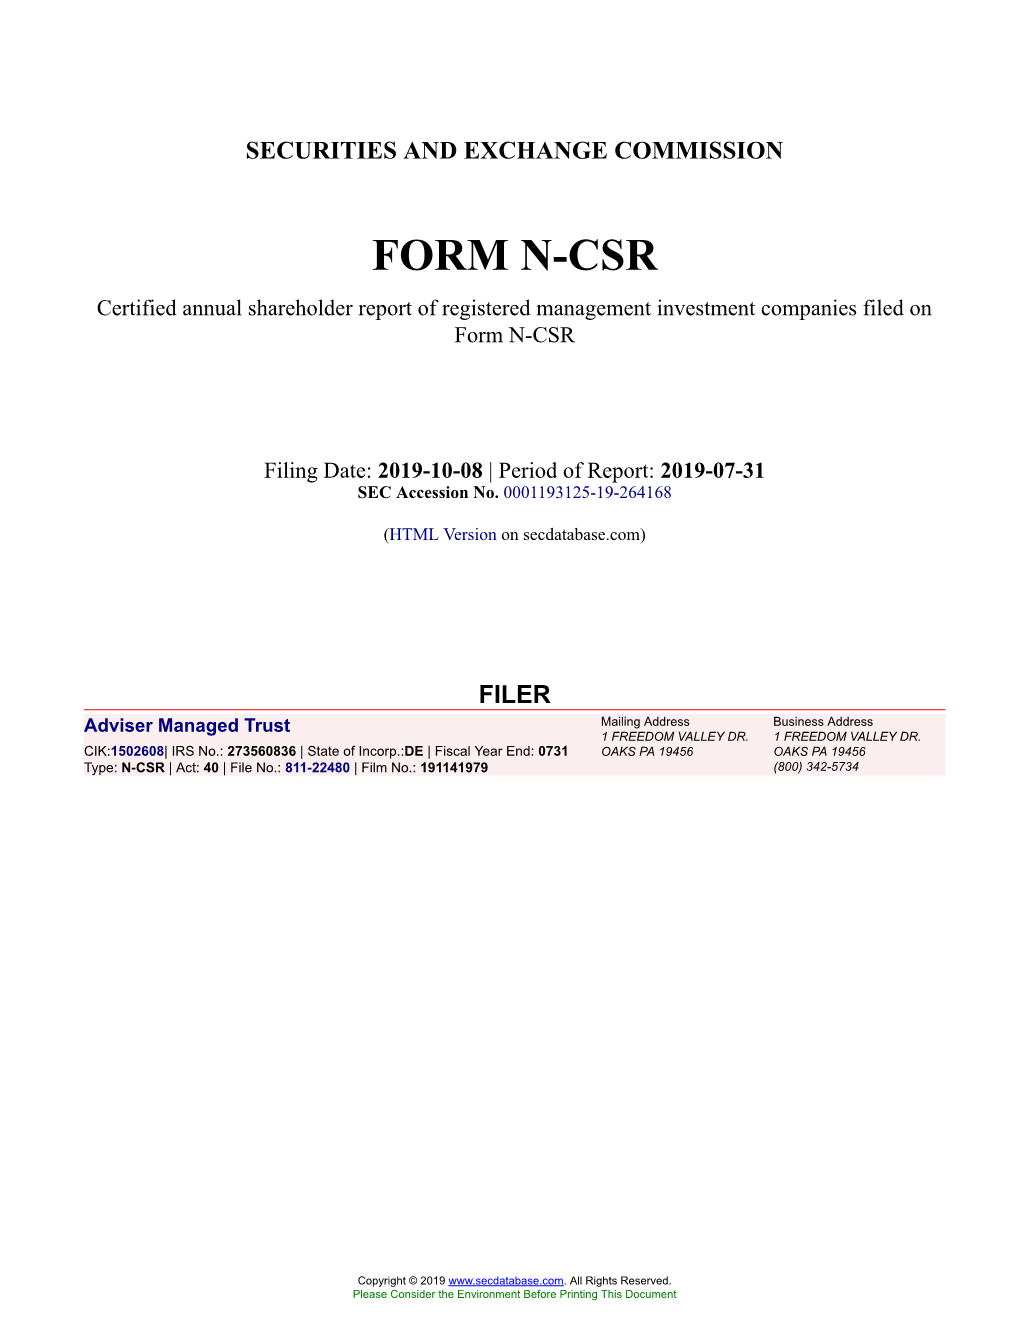 Adviser Managed Trust Form N-CSR Filed 2019-10-08